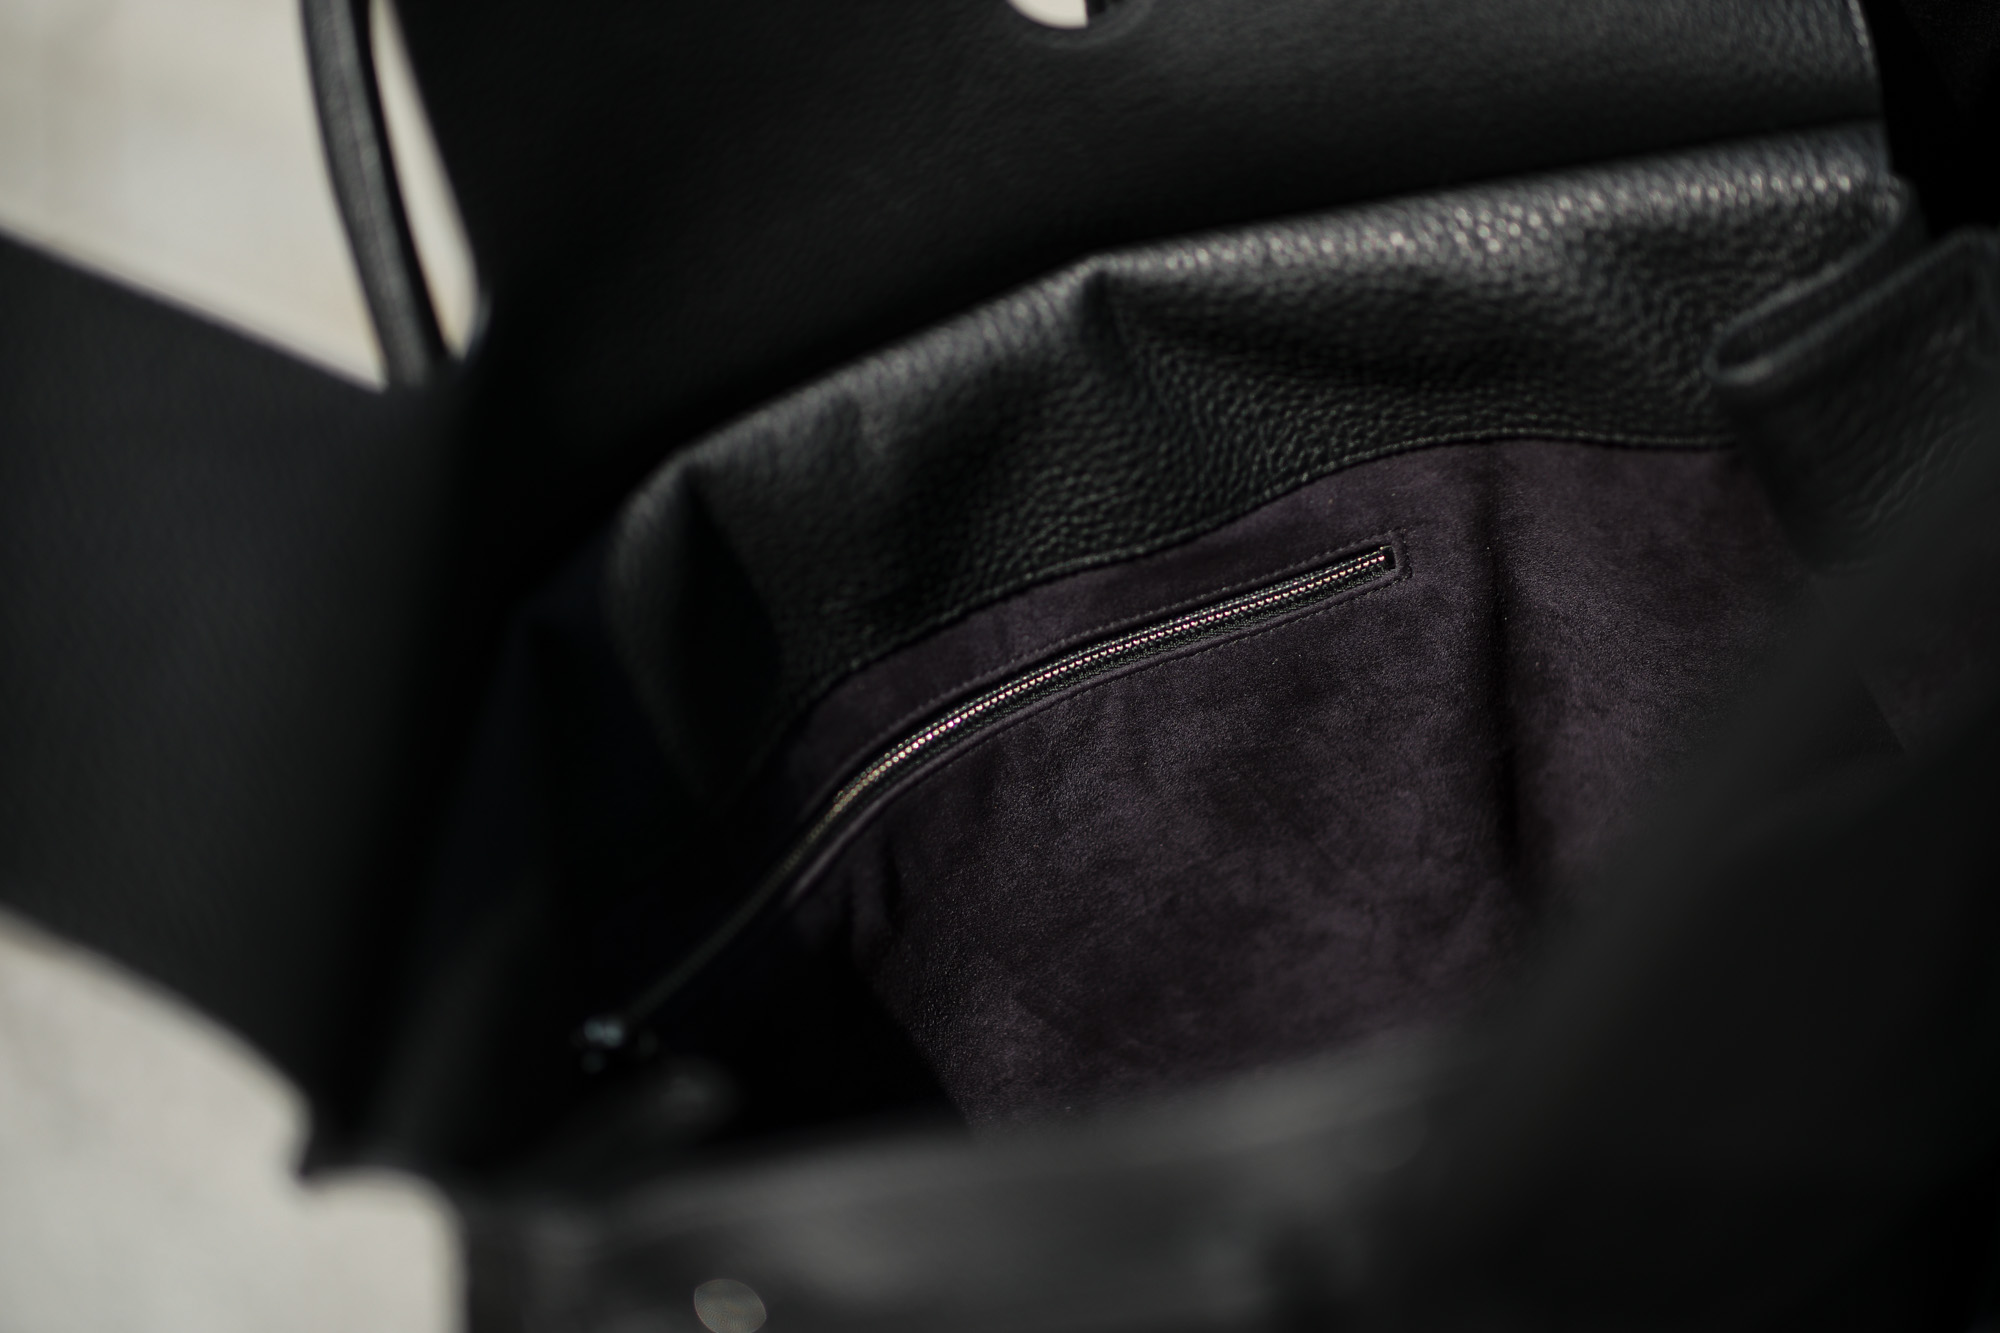 ACATE（アカーテ）OSTRO(オストロ) Montblanc leather(モンブランレザー) トートバック レザーバック NERO(ネロ) MADE IN ITALY(イタリア製) 2019 秋冬新作 愛知 名古屋 altoediritto アルトエデリット